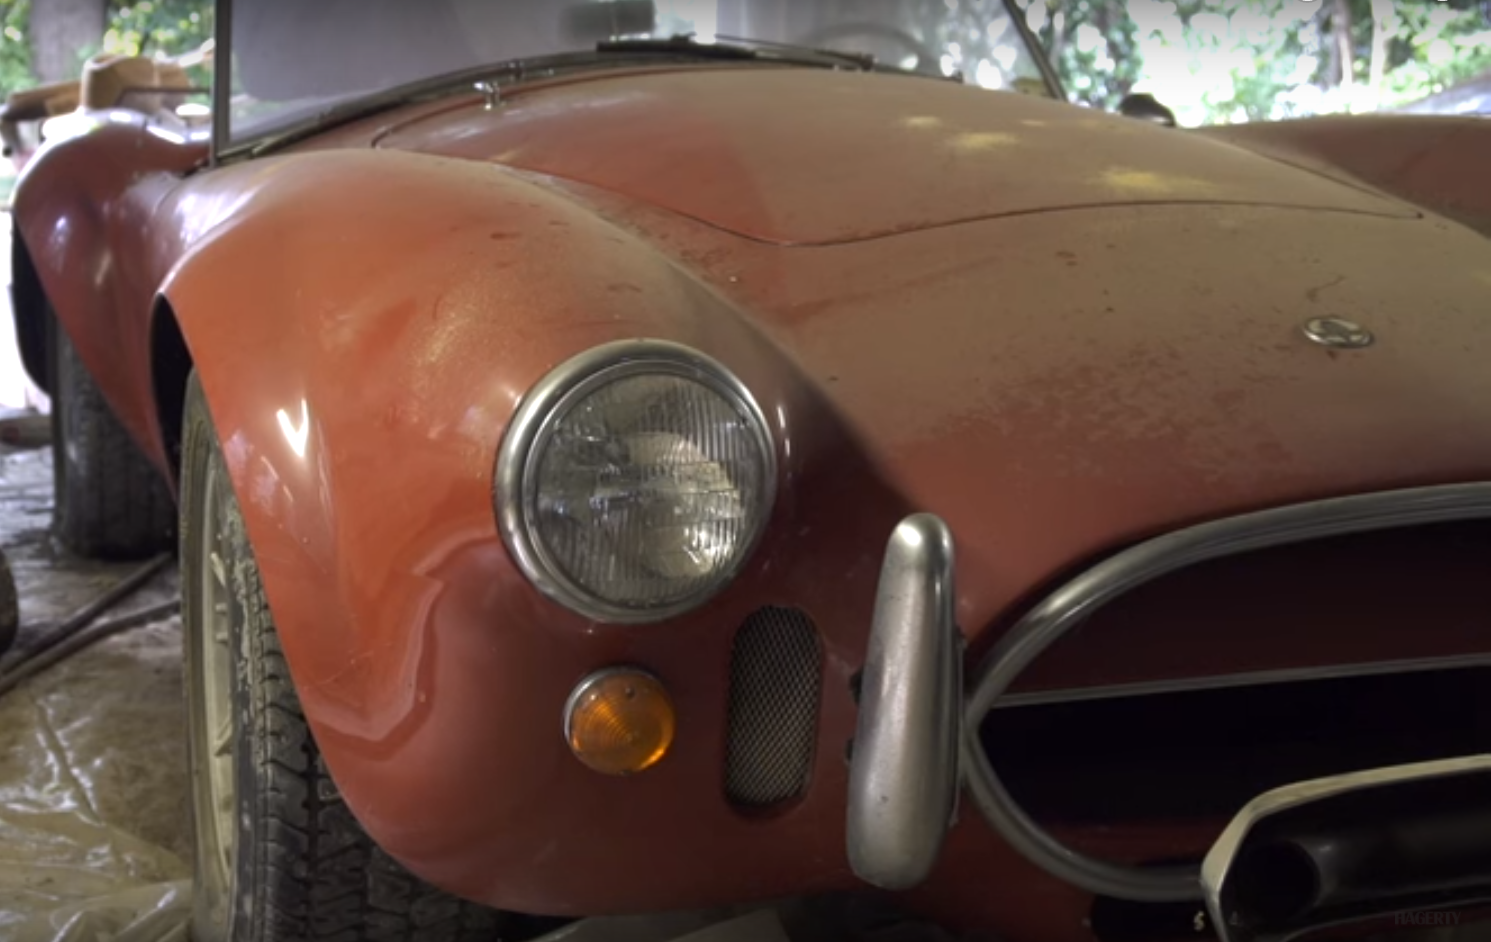 Tag along on $4 million Ferrari and Cobra barn find | ClassicCars.com